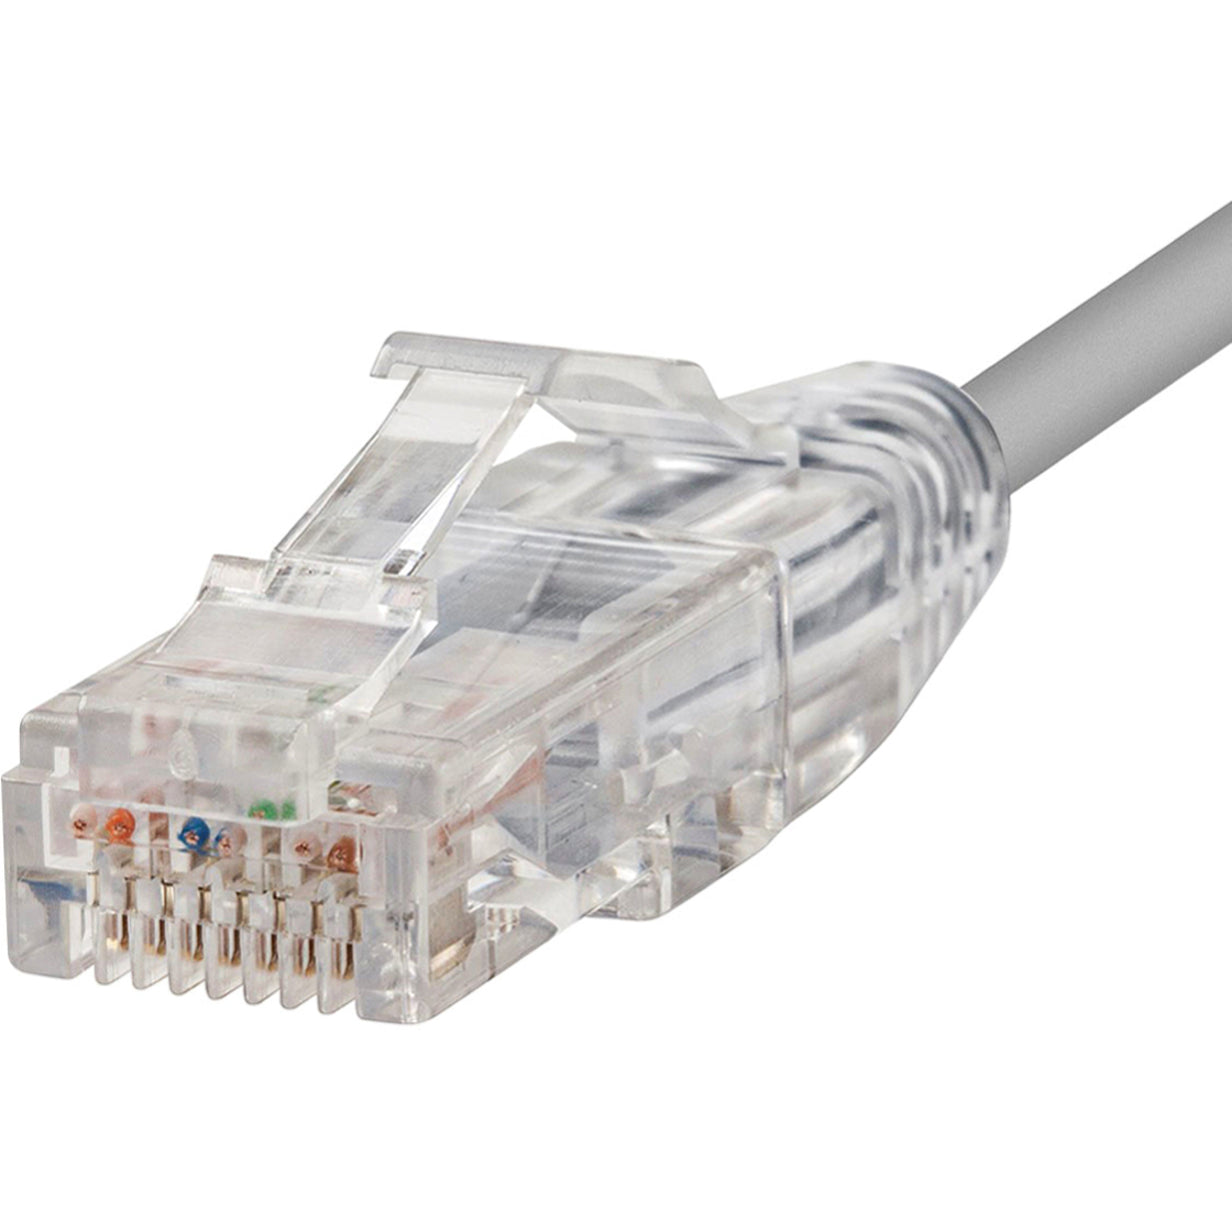 Monoprice 13539 SlimRun Cat6 28AWG UTP Ethernet Network Cable, 7ft Gray, Flexible, Snagless